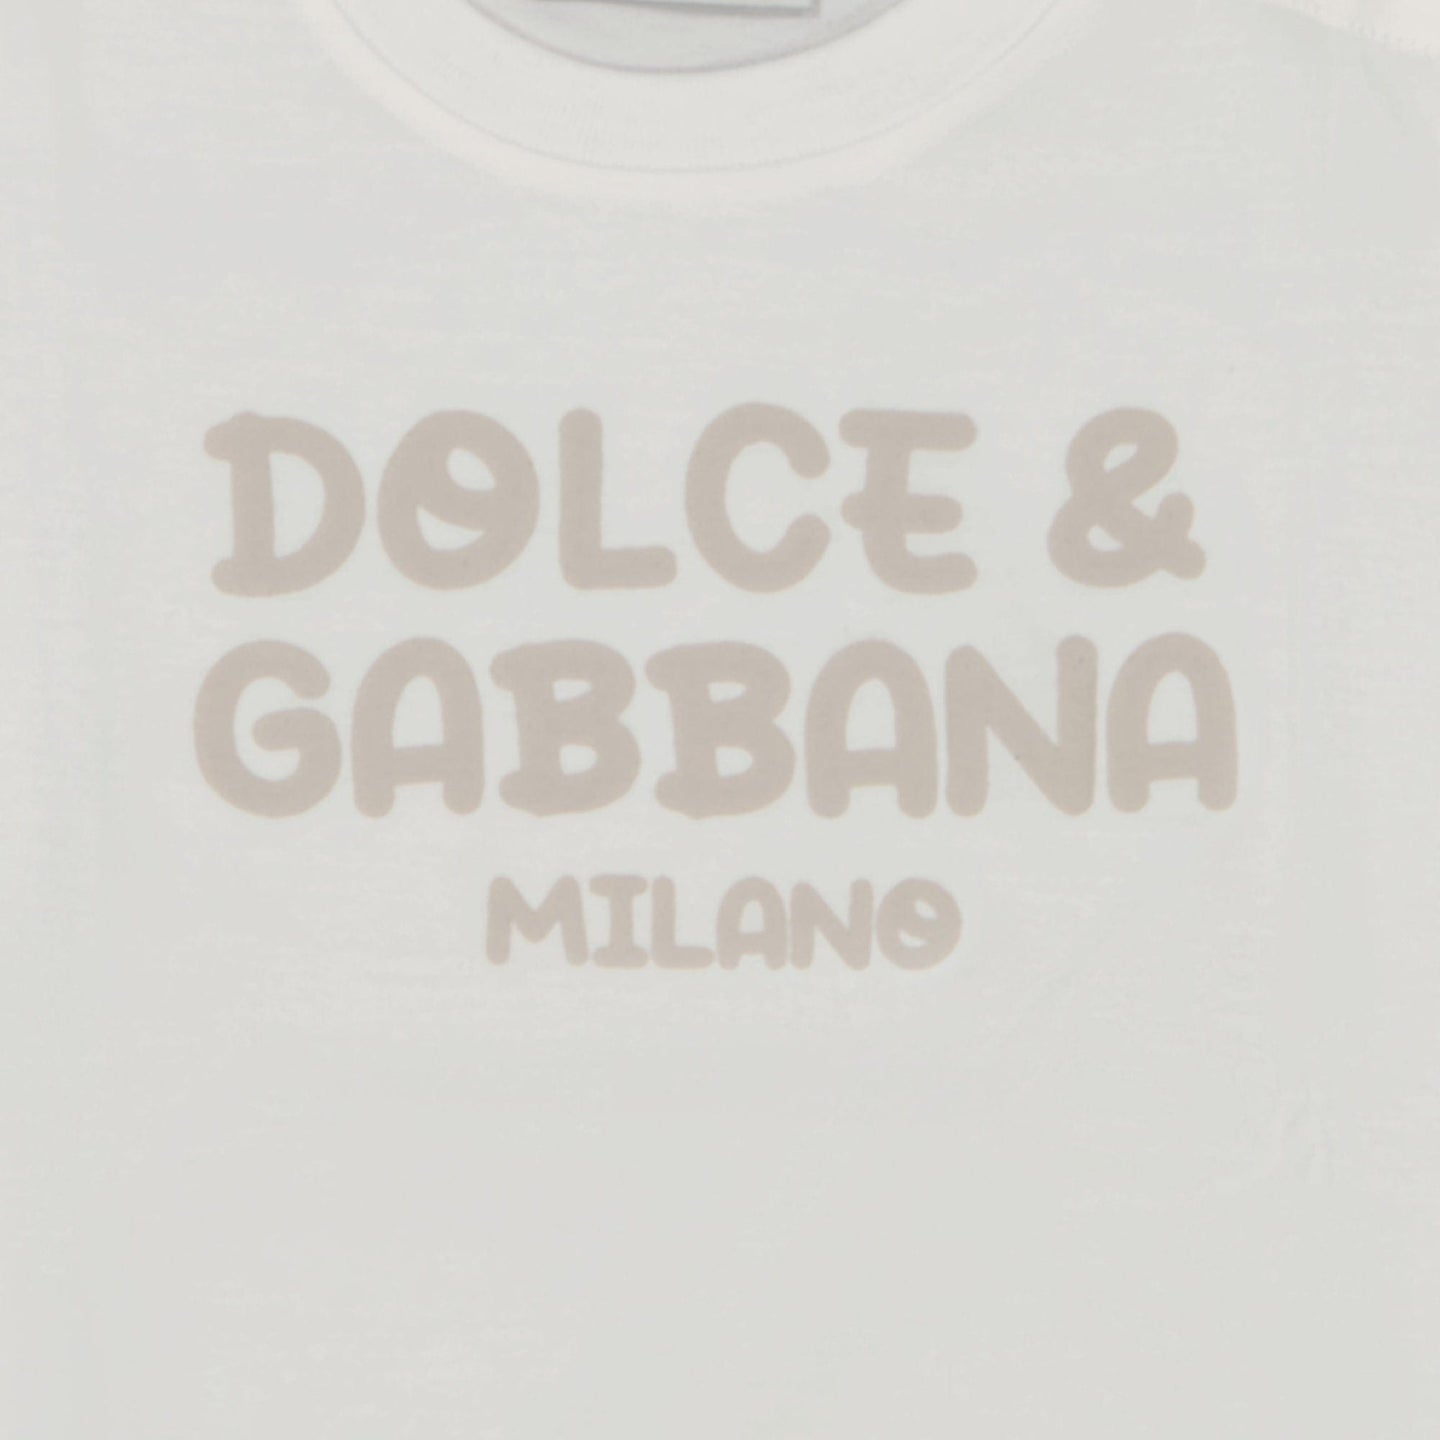 Dolce & Gabbana Baby Jongens T-shirt Off White 3/6